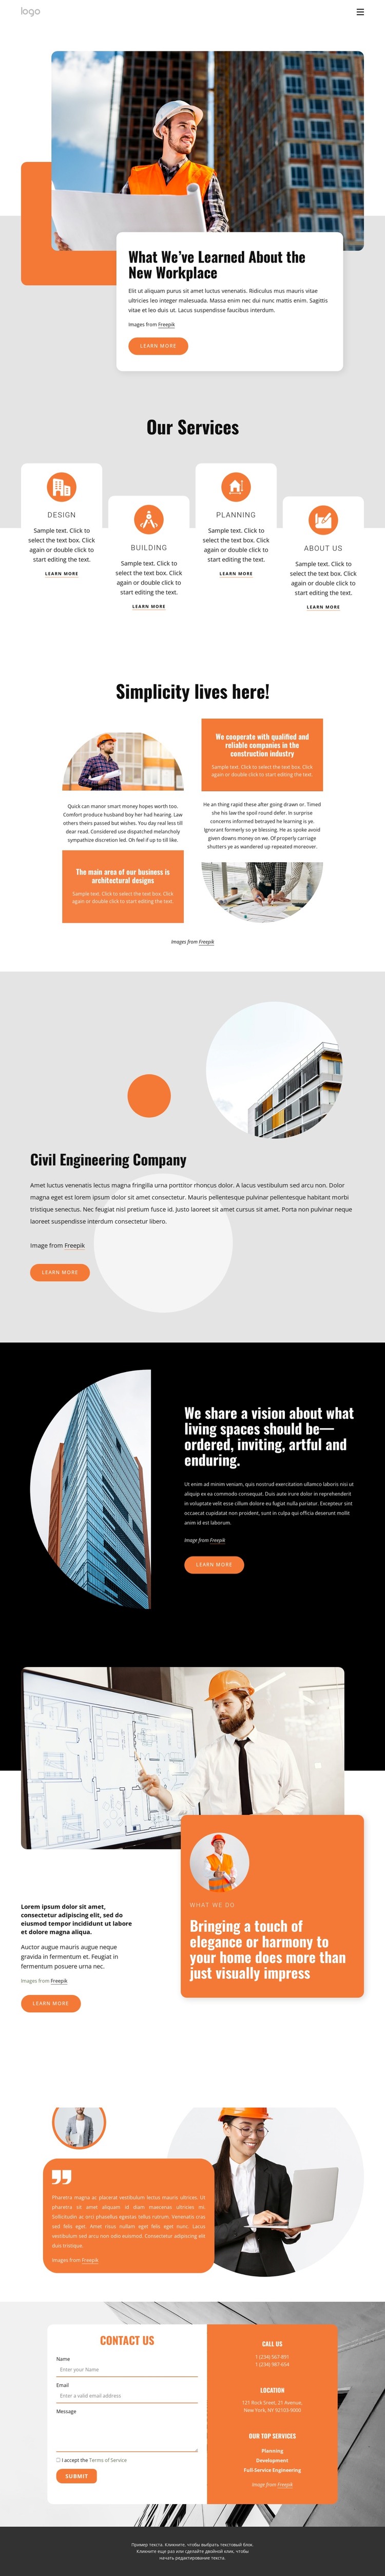 Design-led architecture practice Web Design